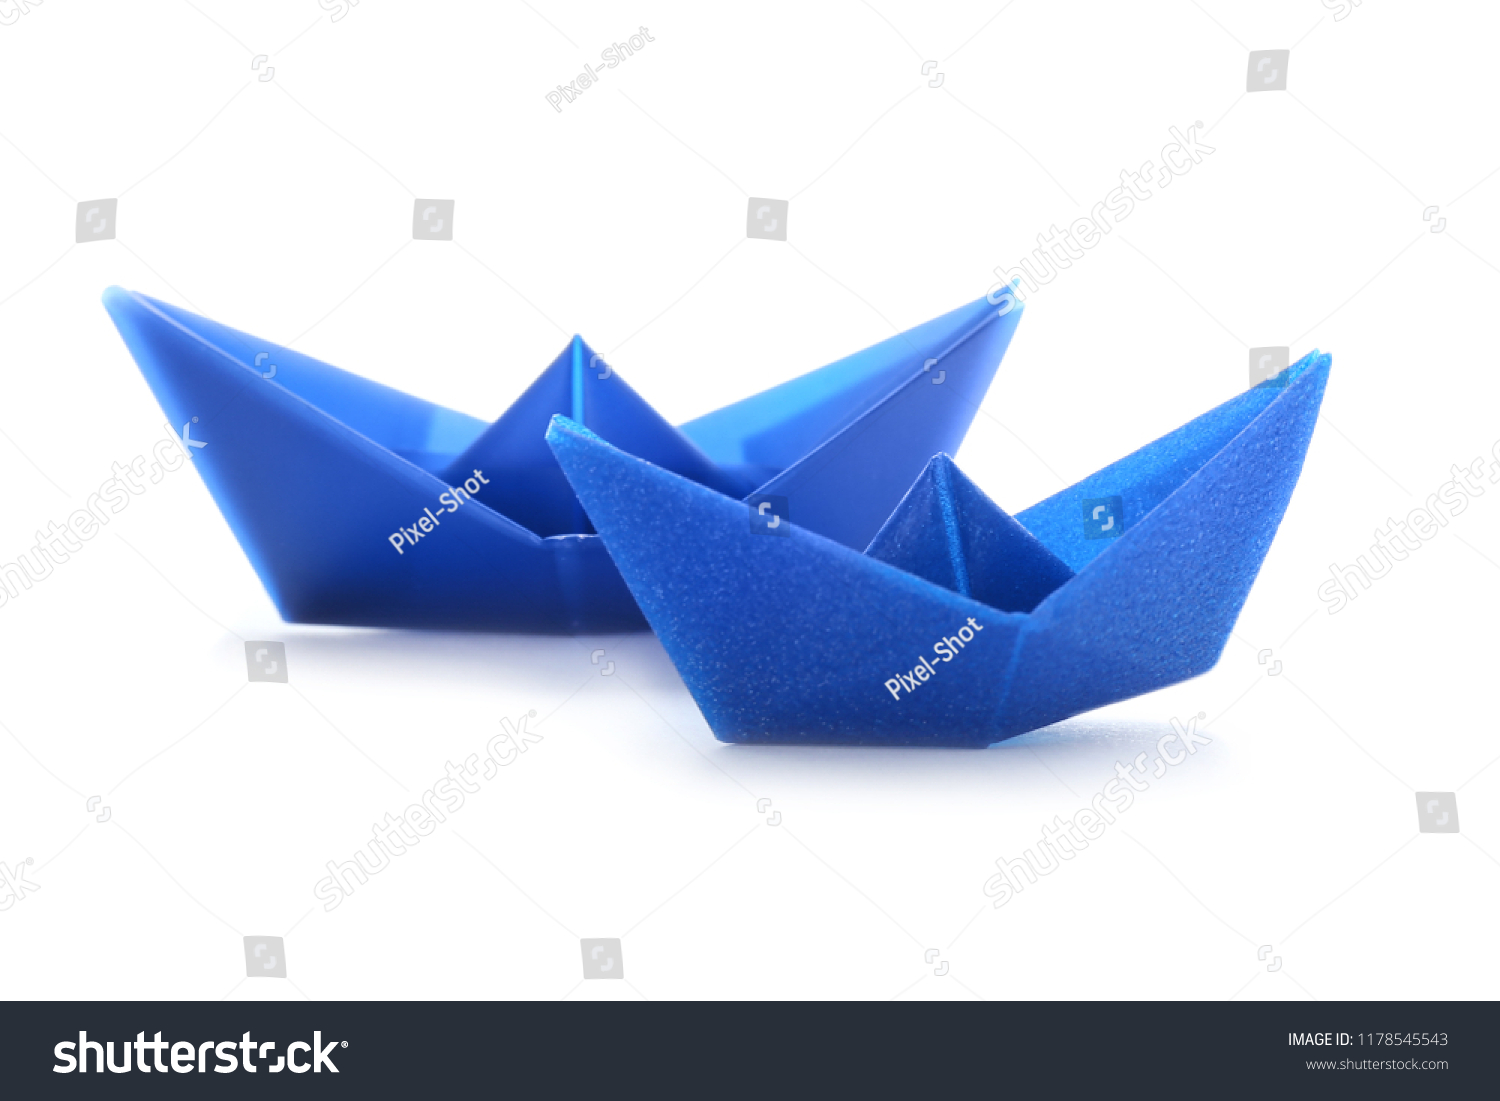 Origami boats on white background #1178545543